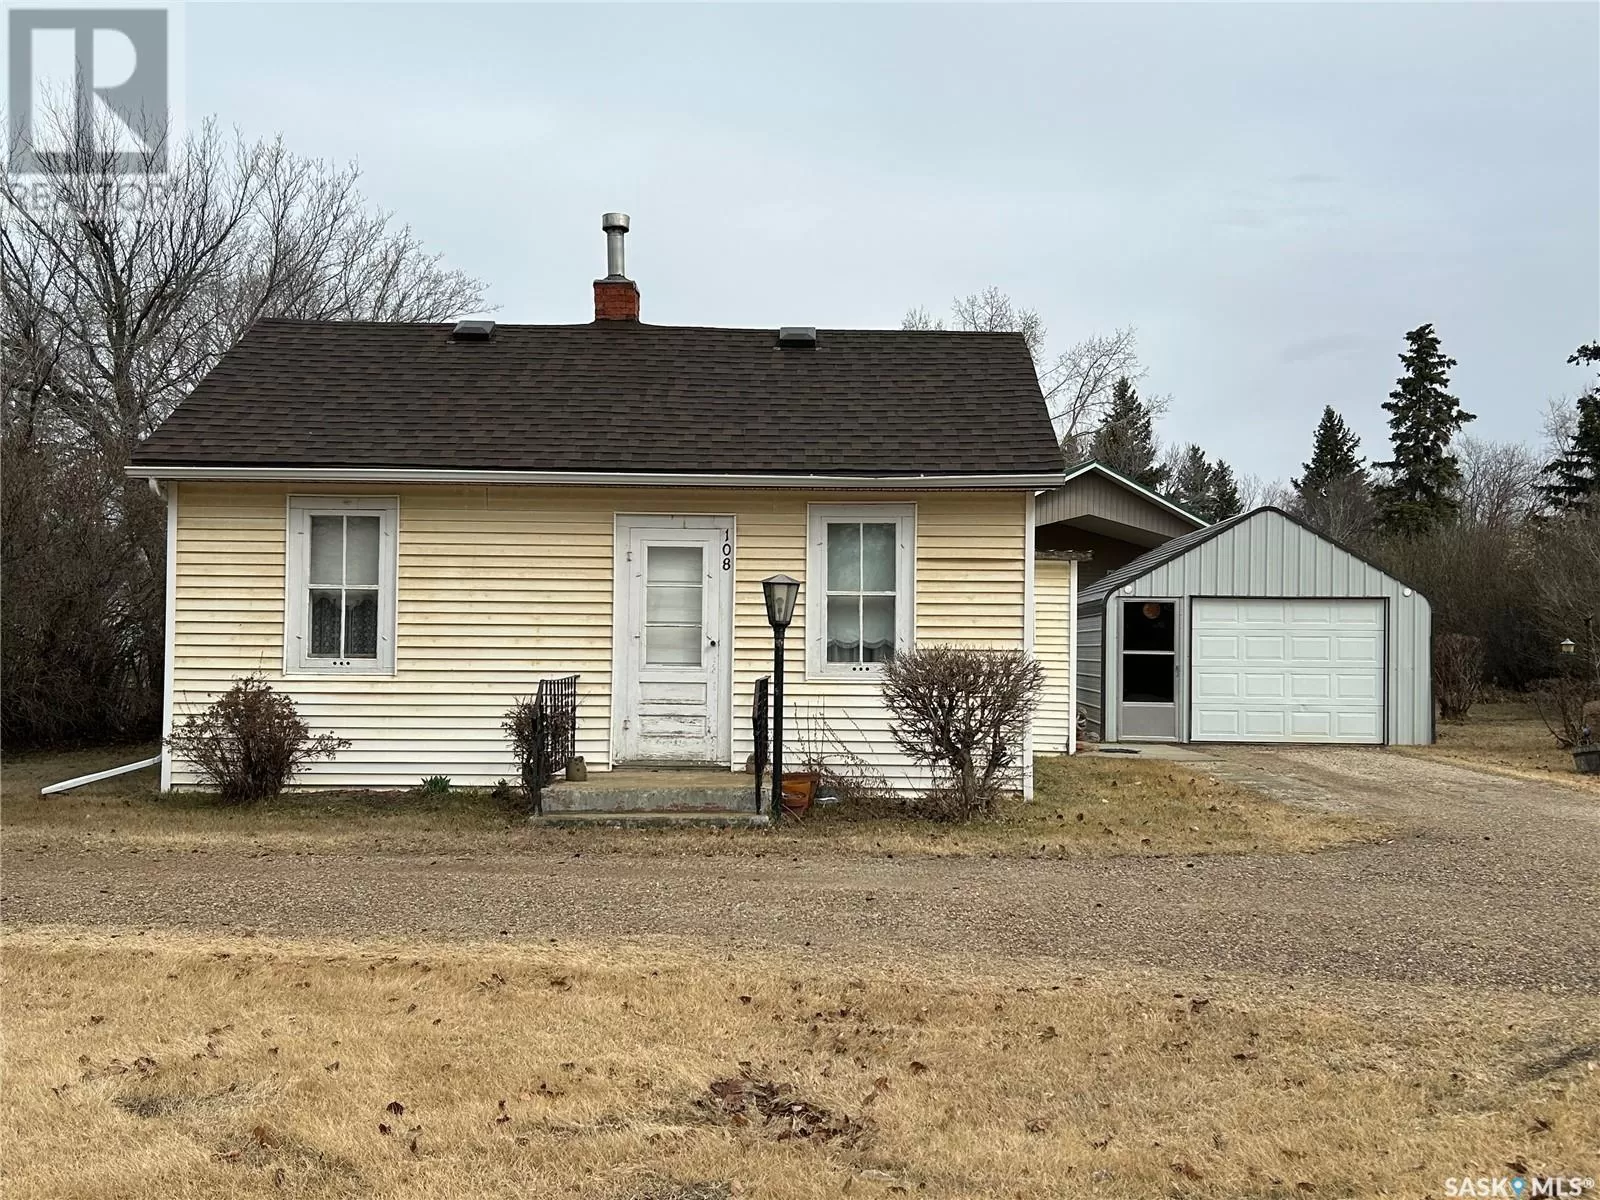 House for rent: 108 3rd Avenue, Maidstone, Saskatchewan S0M 1M0